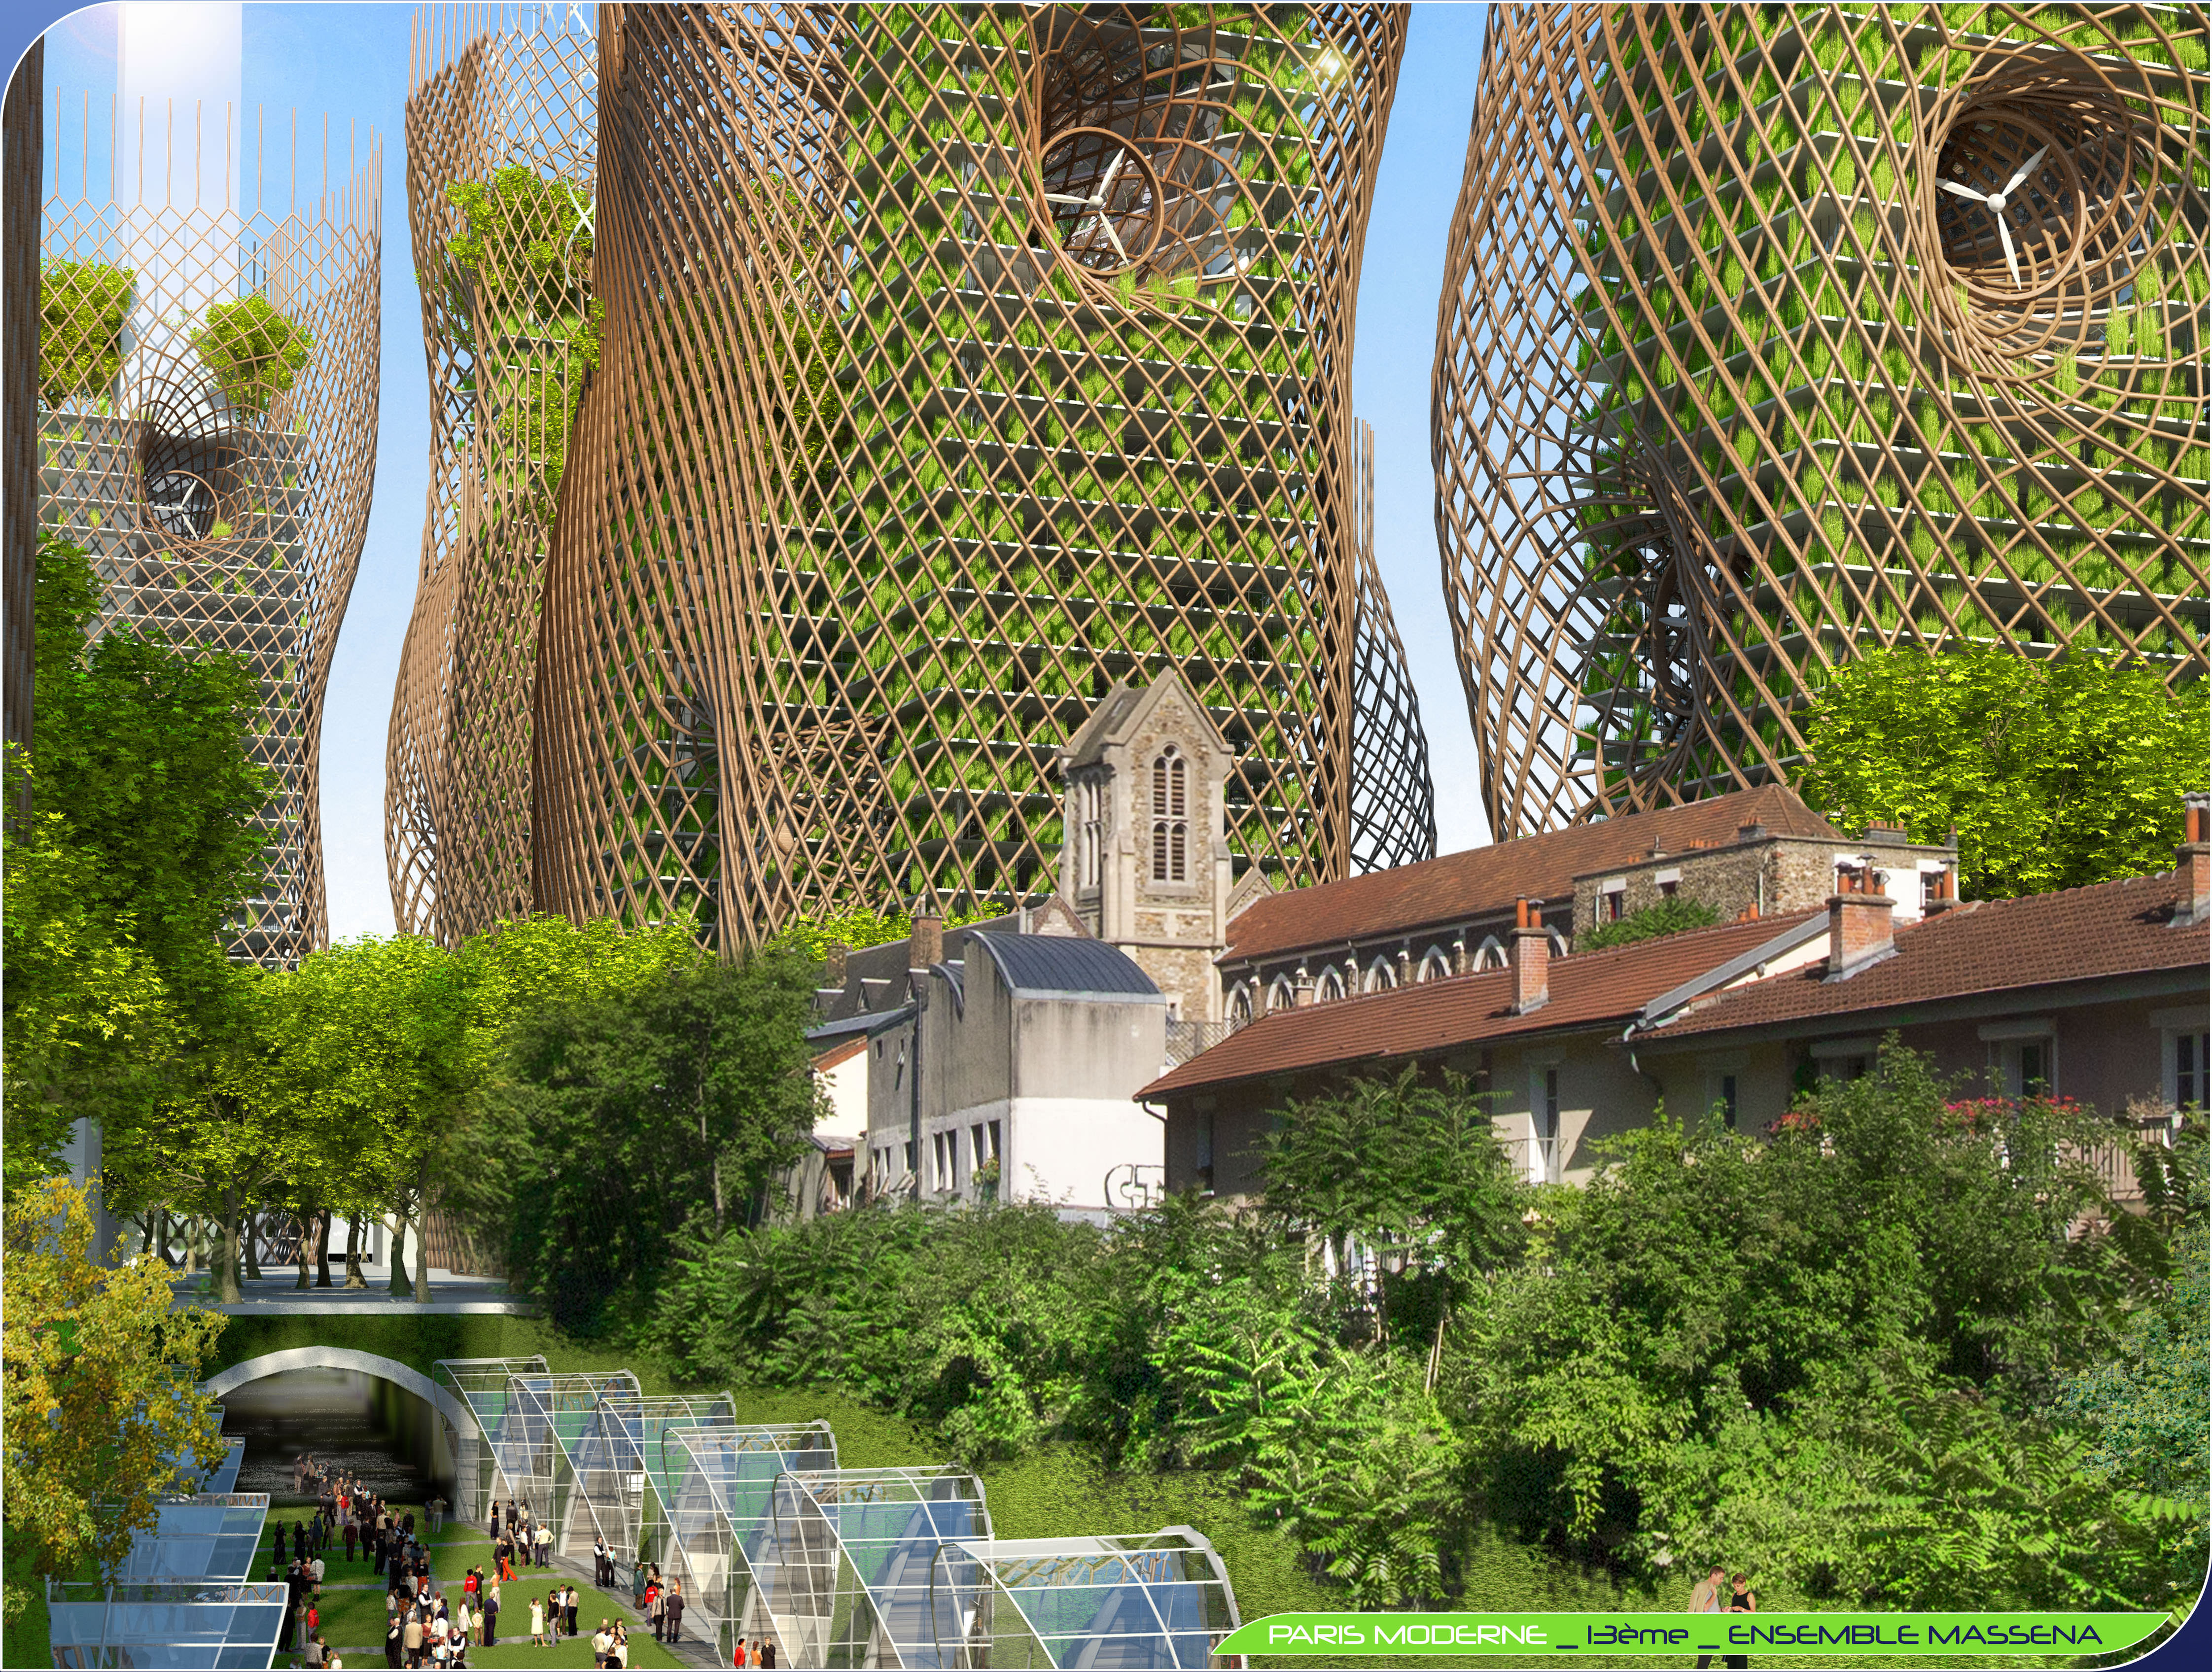 paris 2050 bamboo nest towers 3